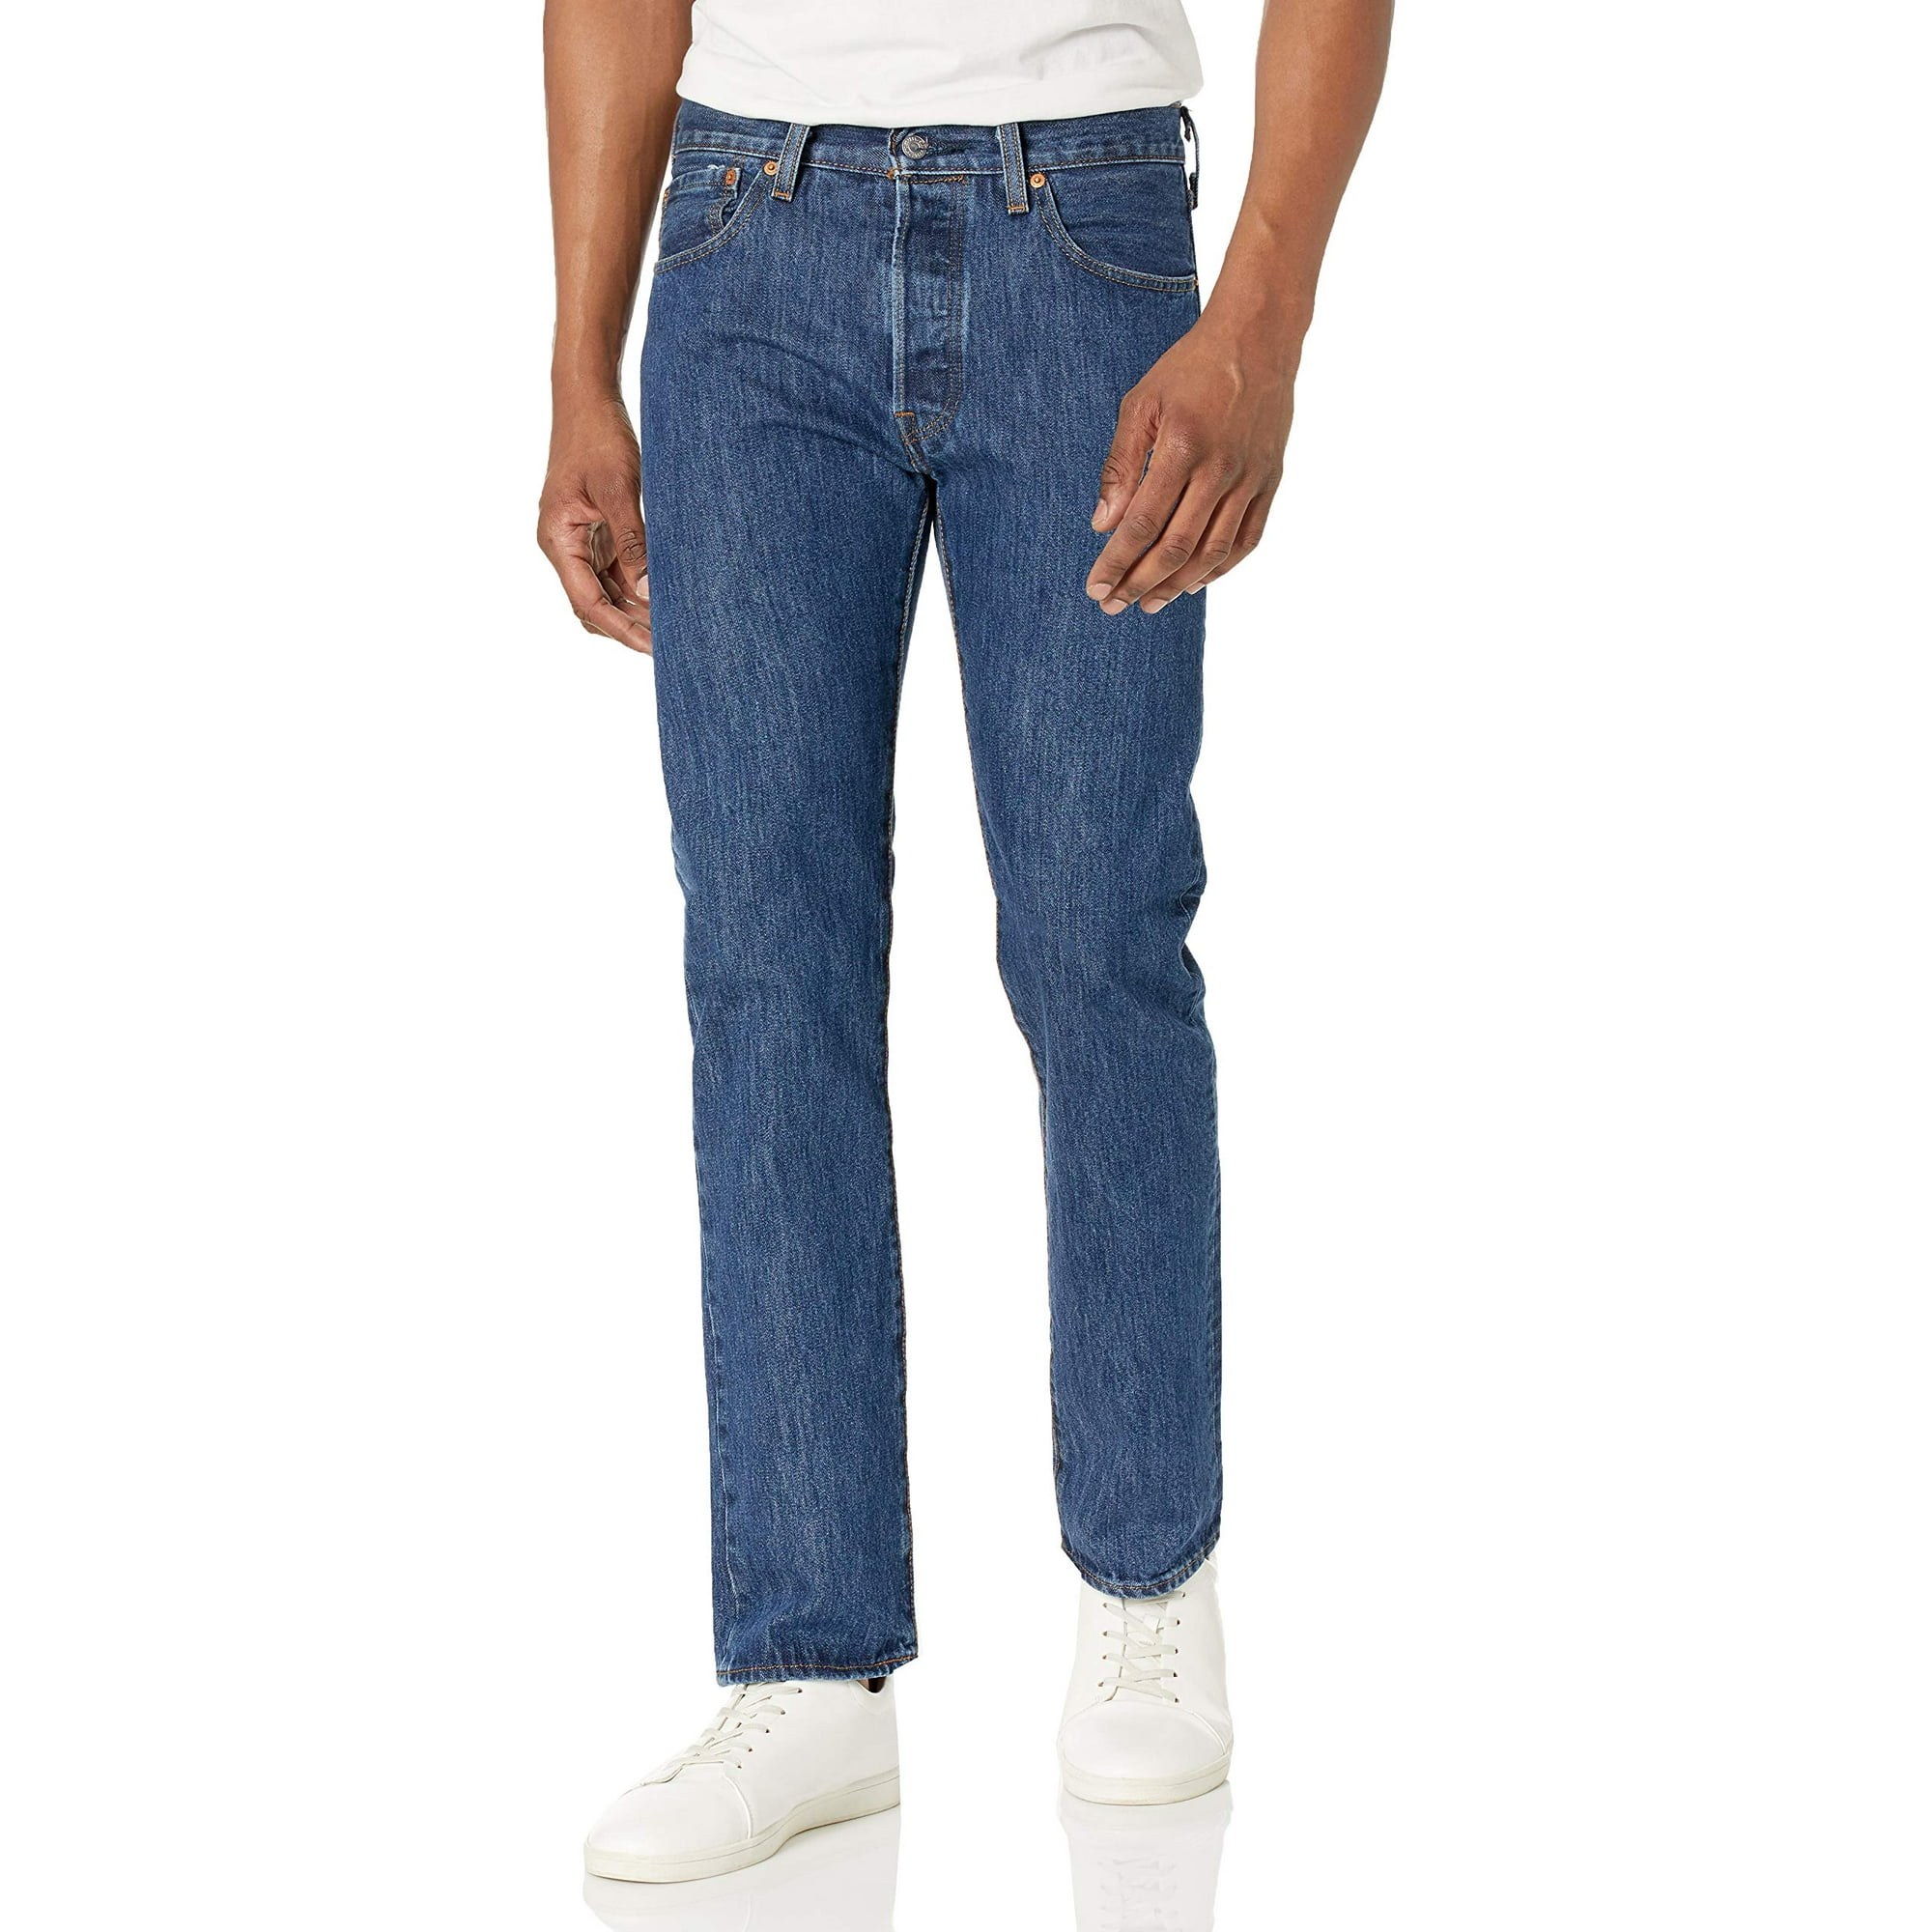 Levi's Men's 501 Original Fit Jean, Dark Stonewash, 38X36 | Walmart Canada